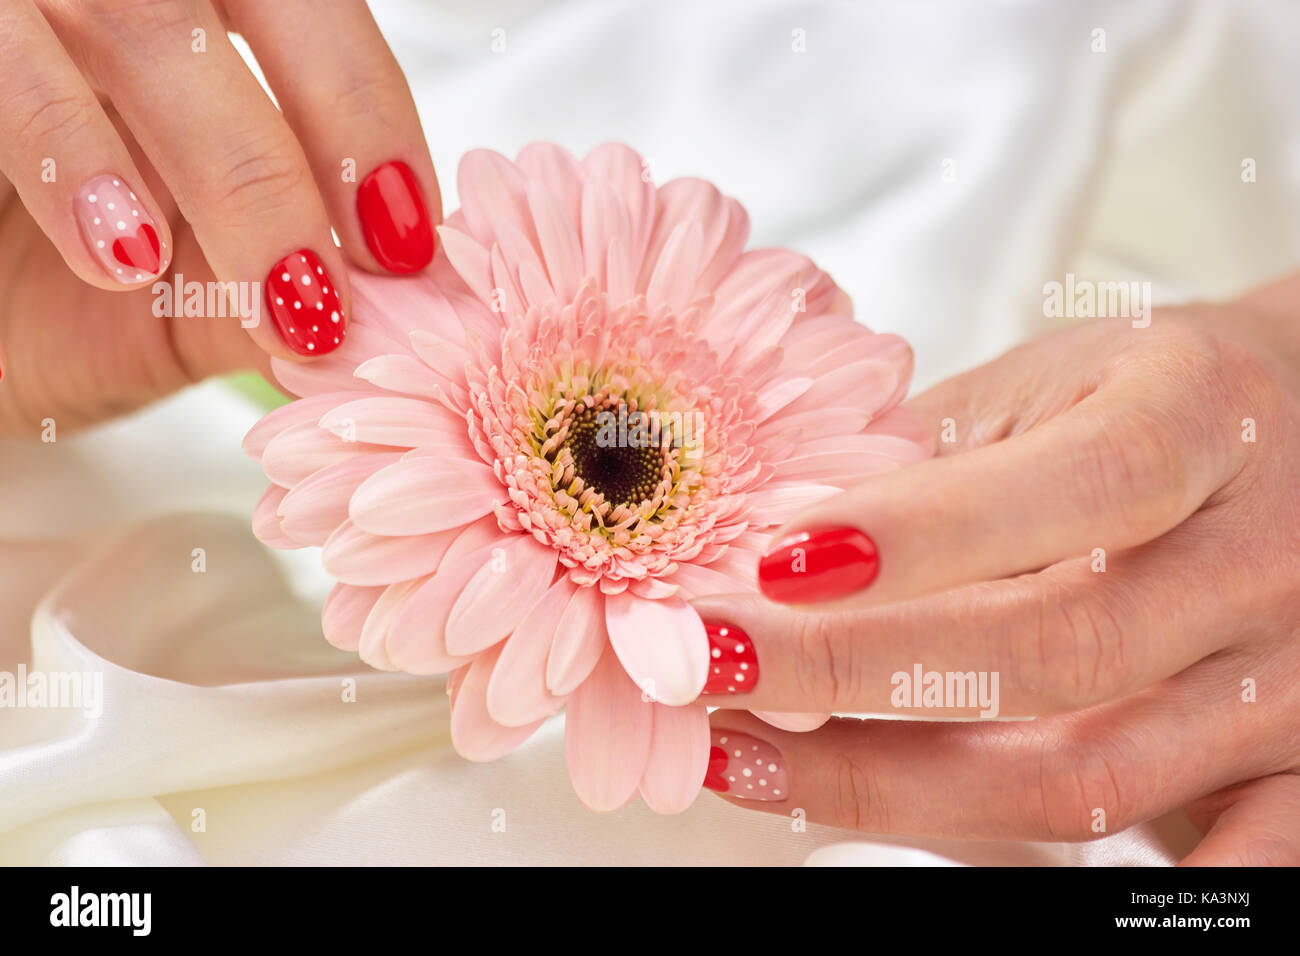 Female Gentle Hands Holding Gerbera Peach Color Gerbera In Female Hands With Romantic Manicure